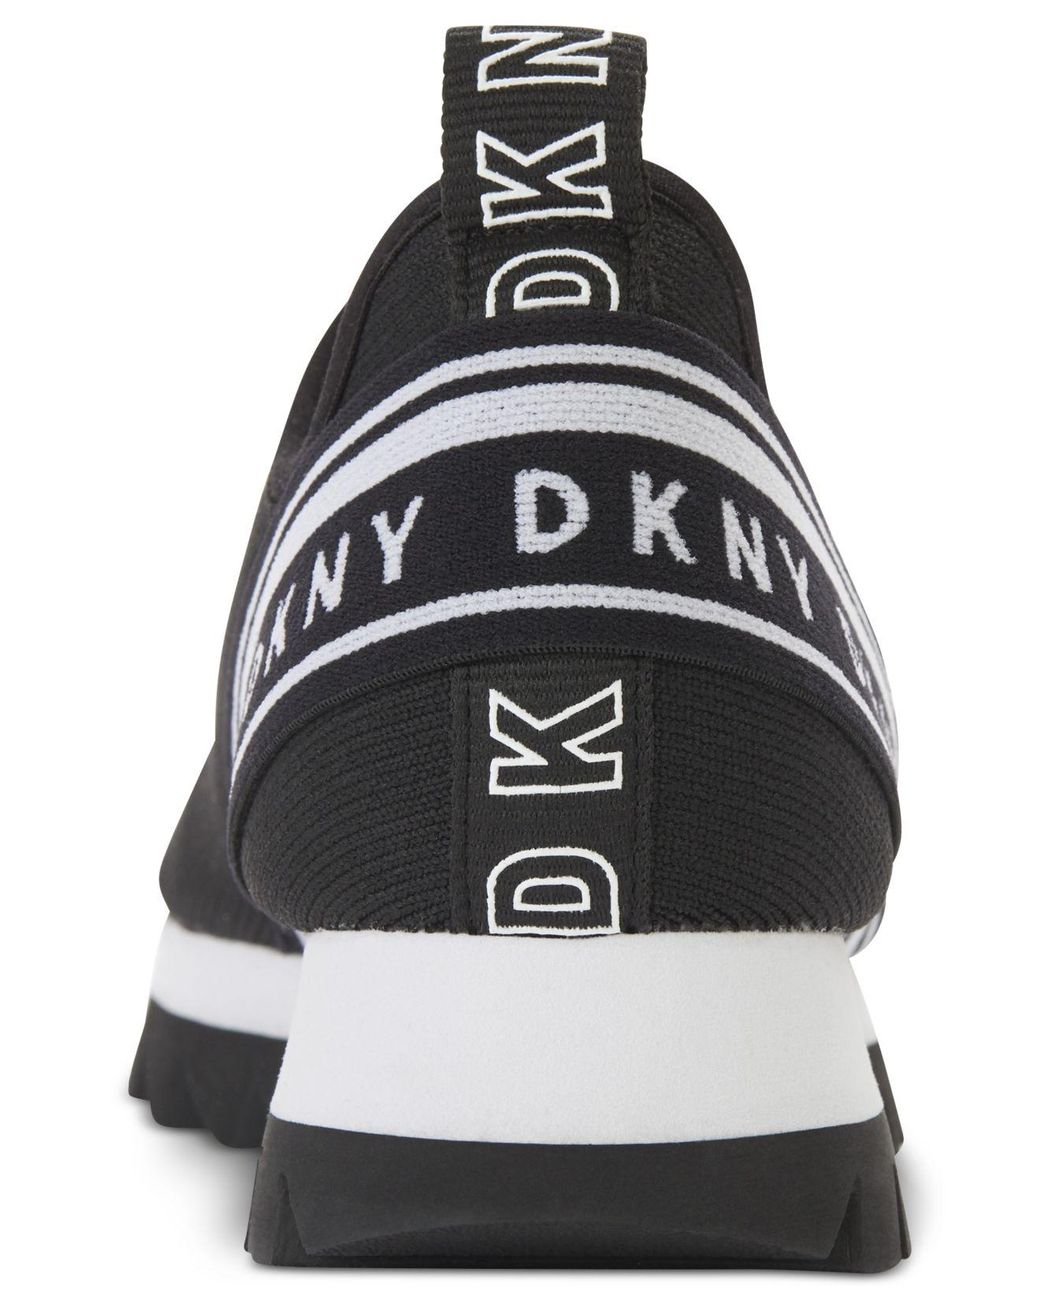 DKNY Neoprene Abbi Sneakers, Created For Macy's in Black - Lyst